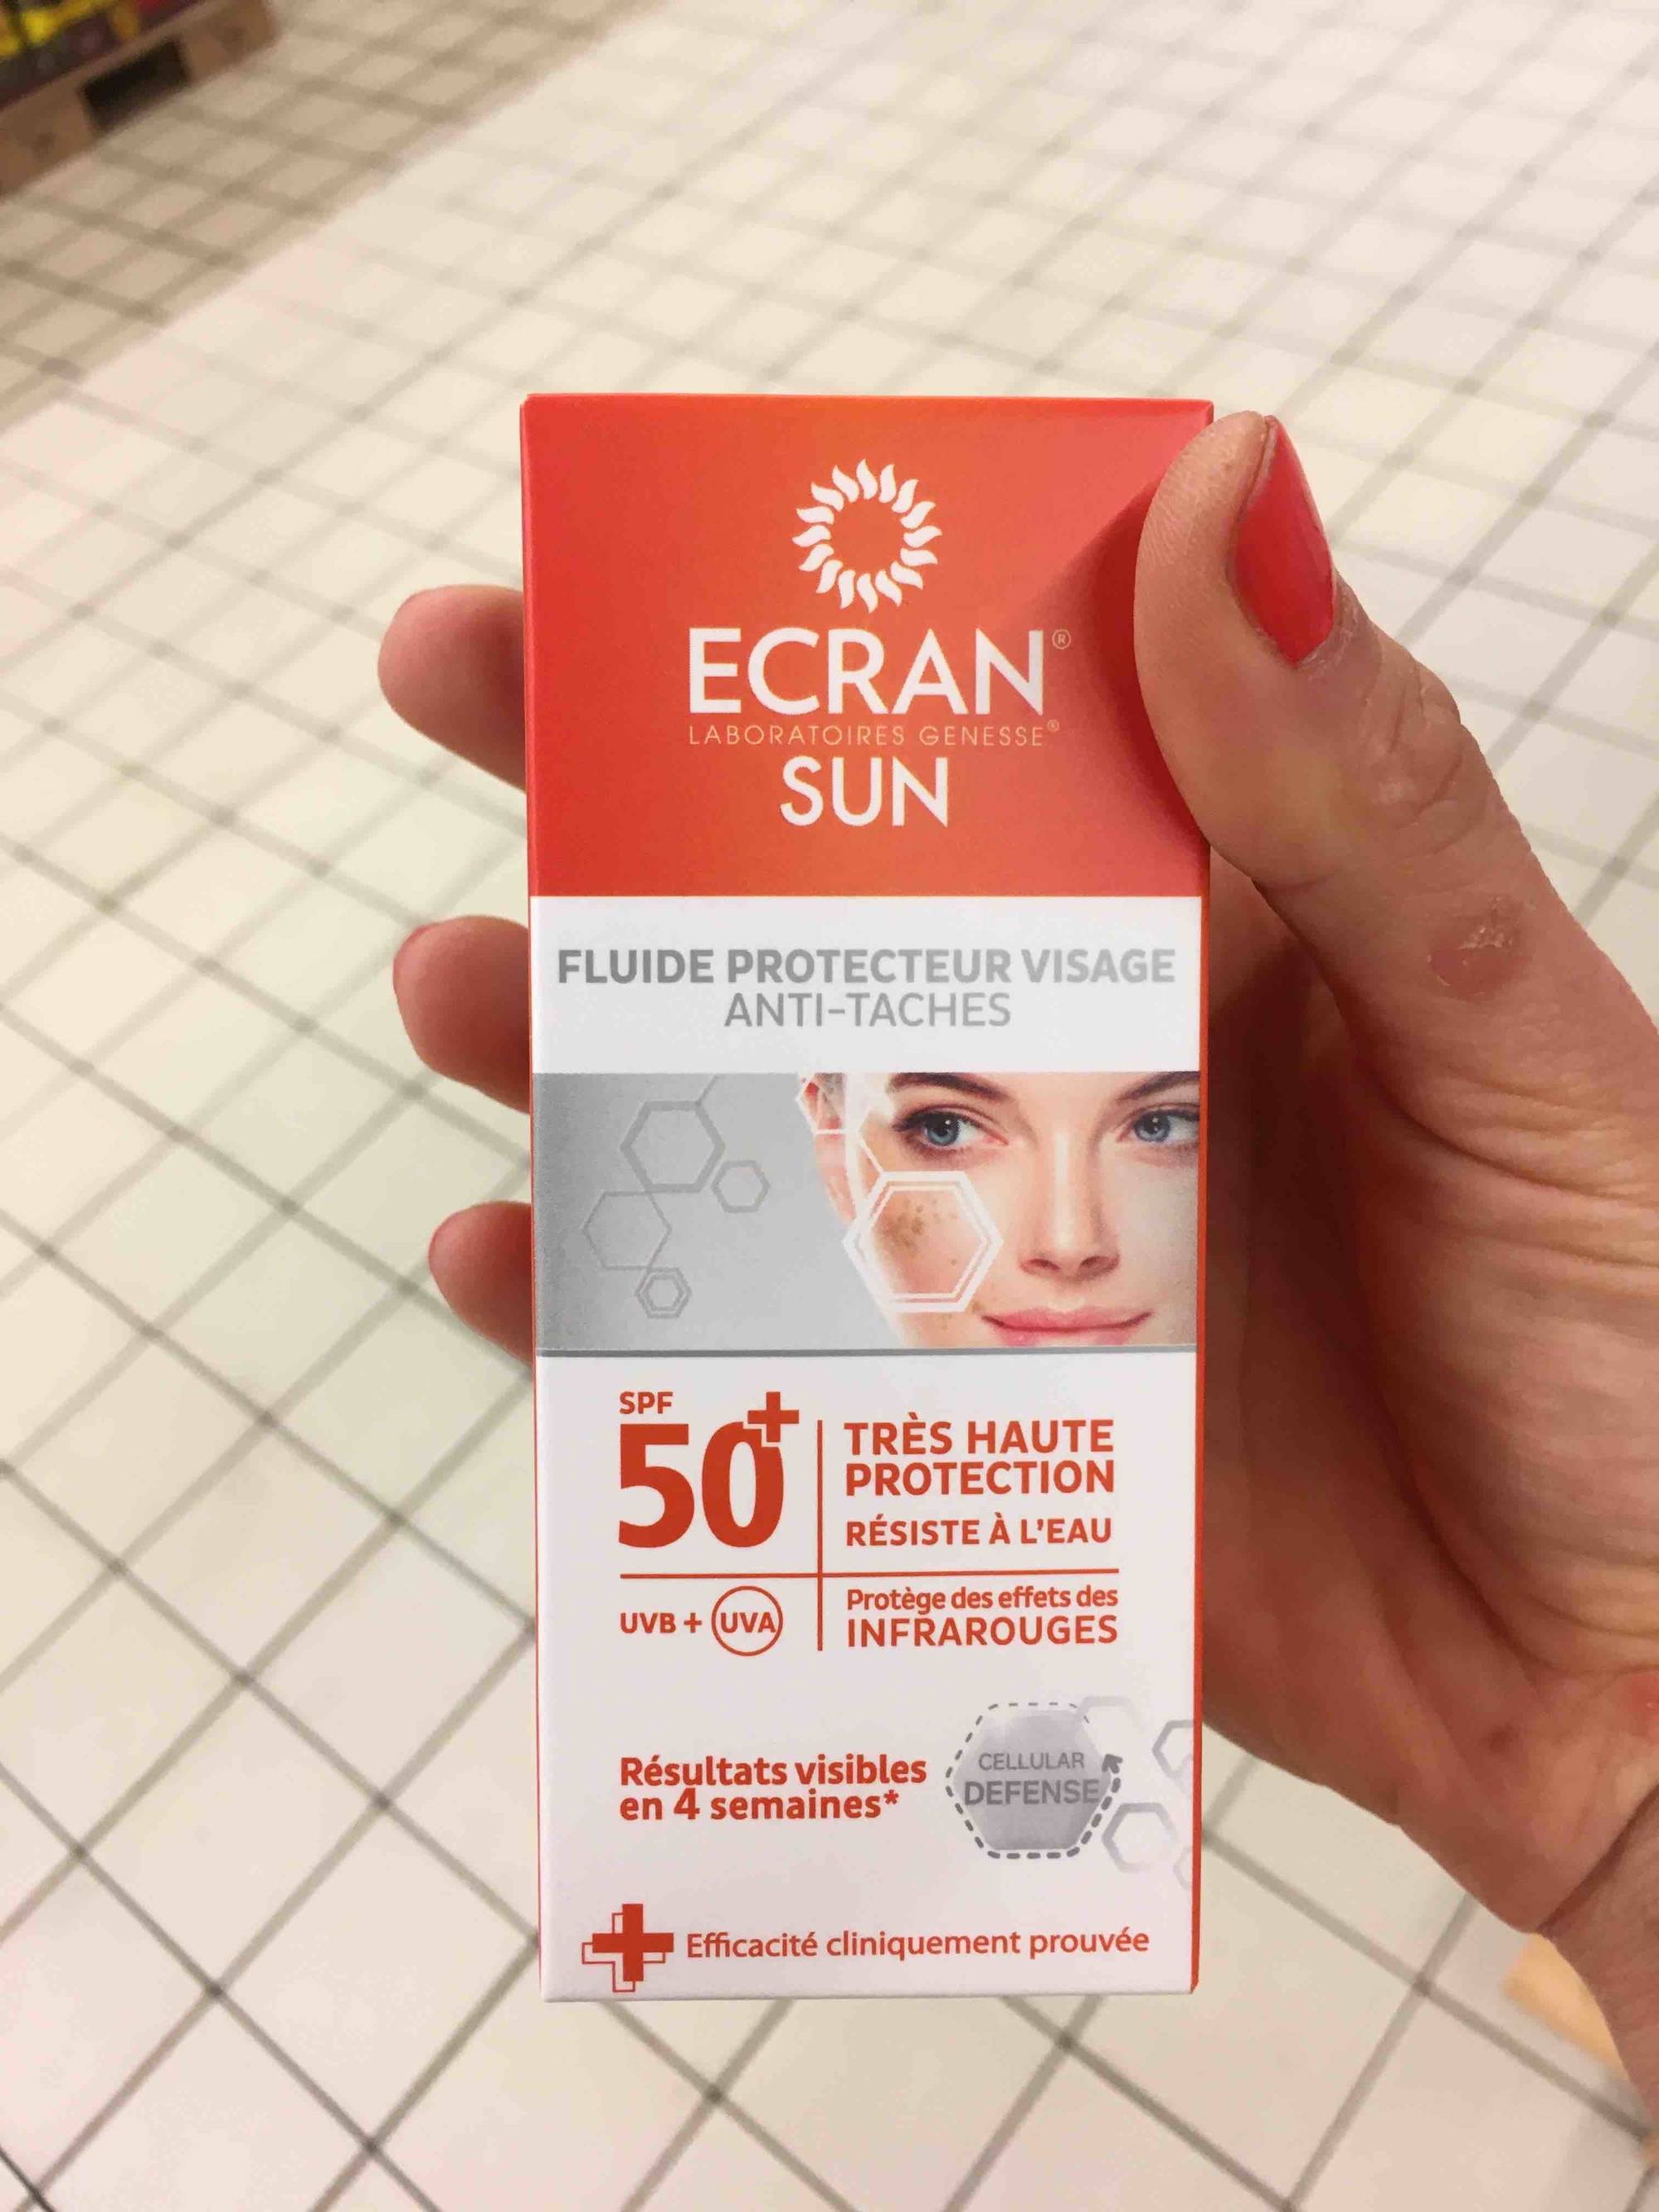 ECRAN LABORATOIRES GENESSE - Sun Fluide protecteur visage SPF 50+